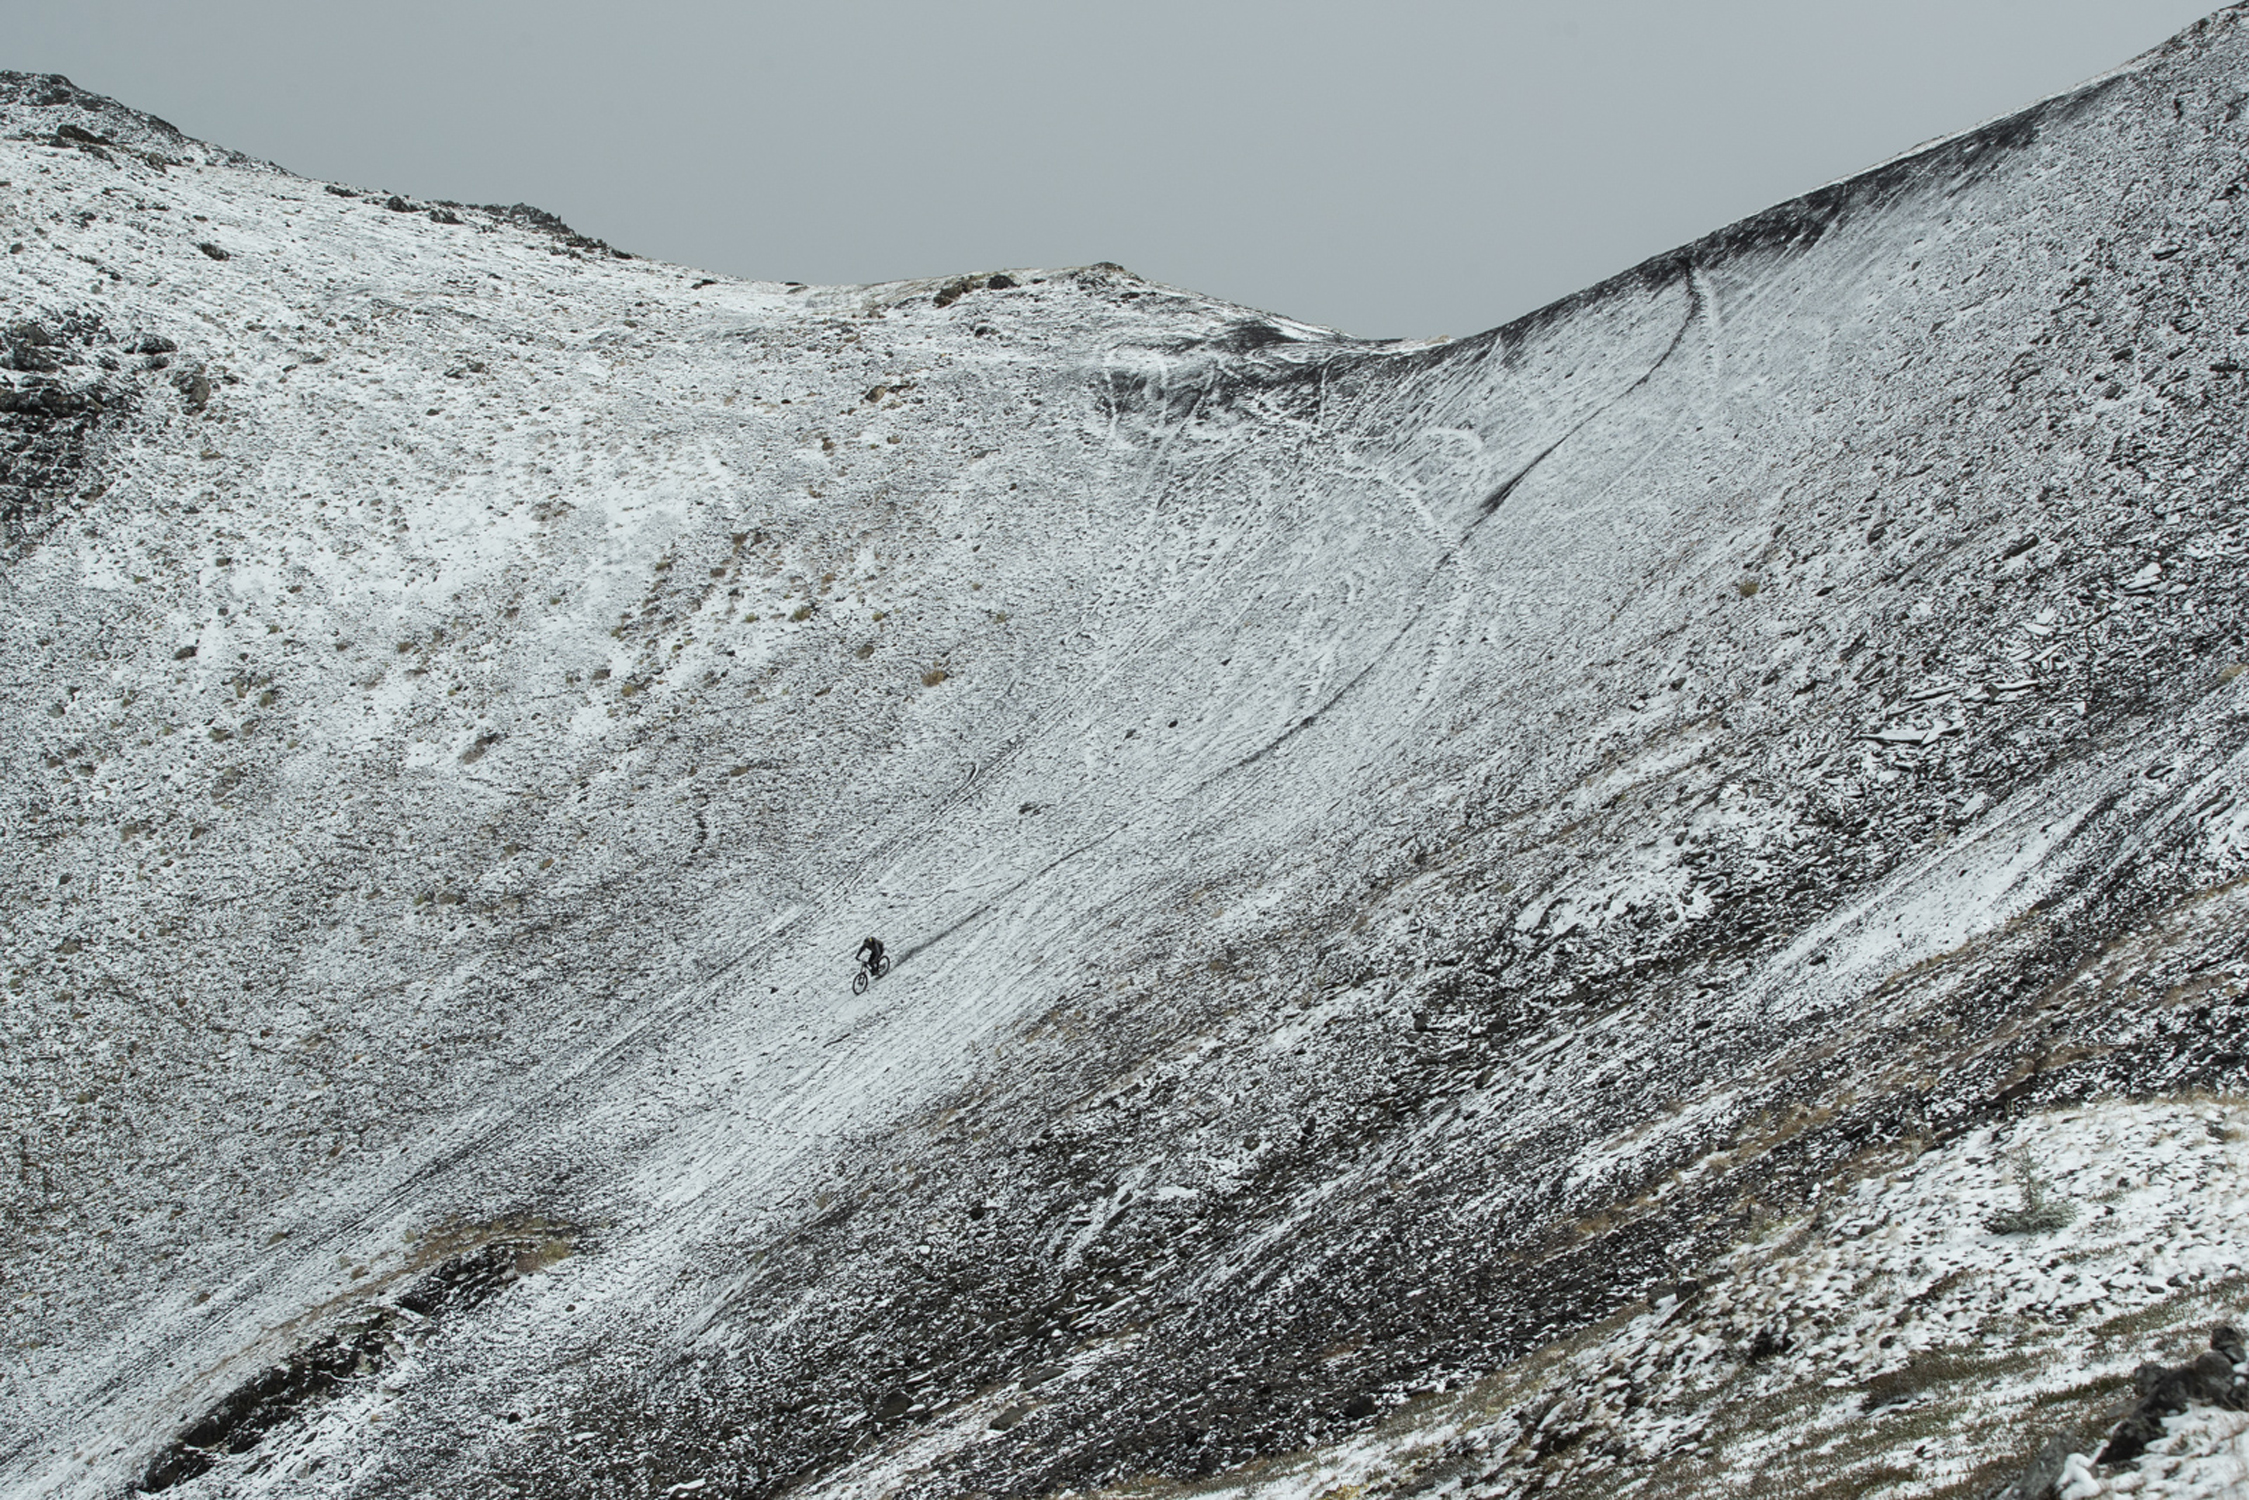 Kurt Sorge 在覆雪的山林中騎乘 